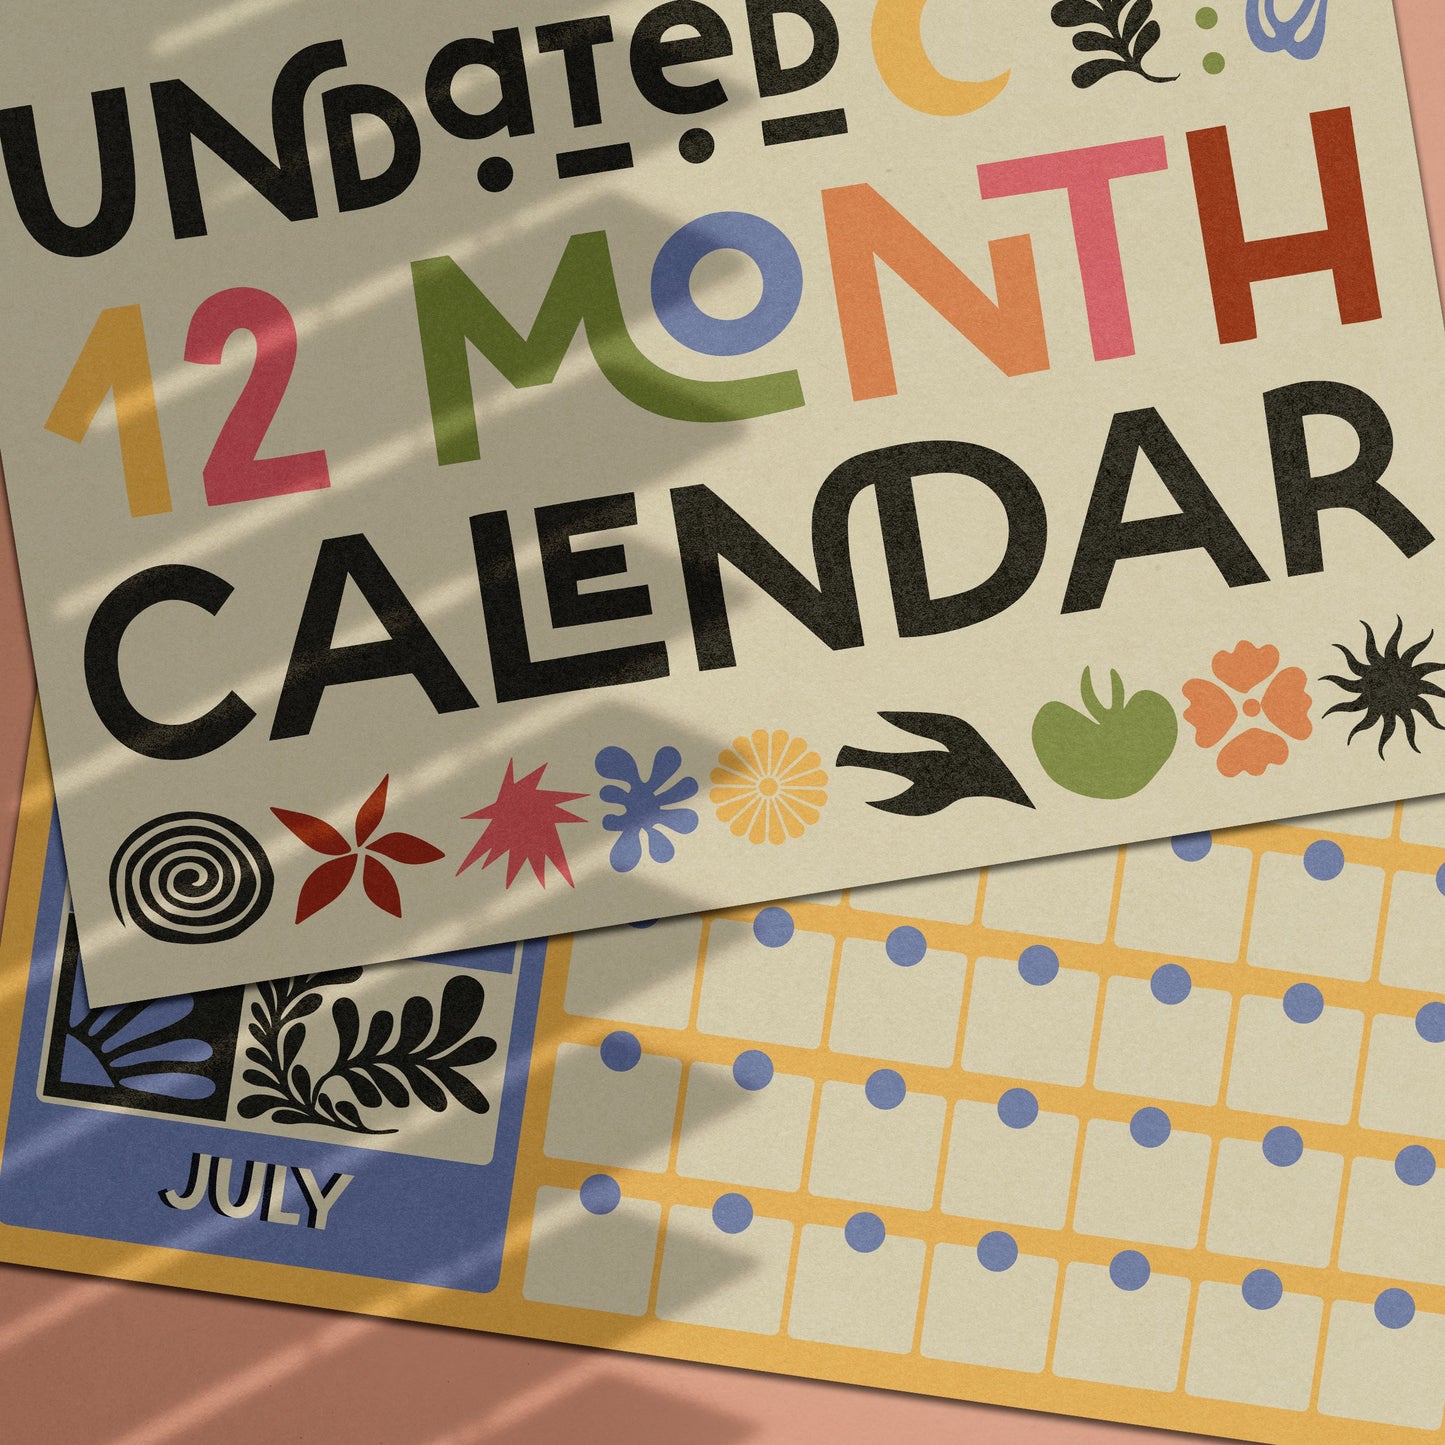 Undated Monthly Calendar | Wall Planner | Matisse Inspired | A4 Landscape | 12 month wirebound hanging calendar-4